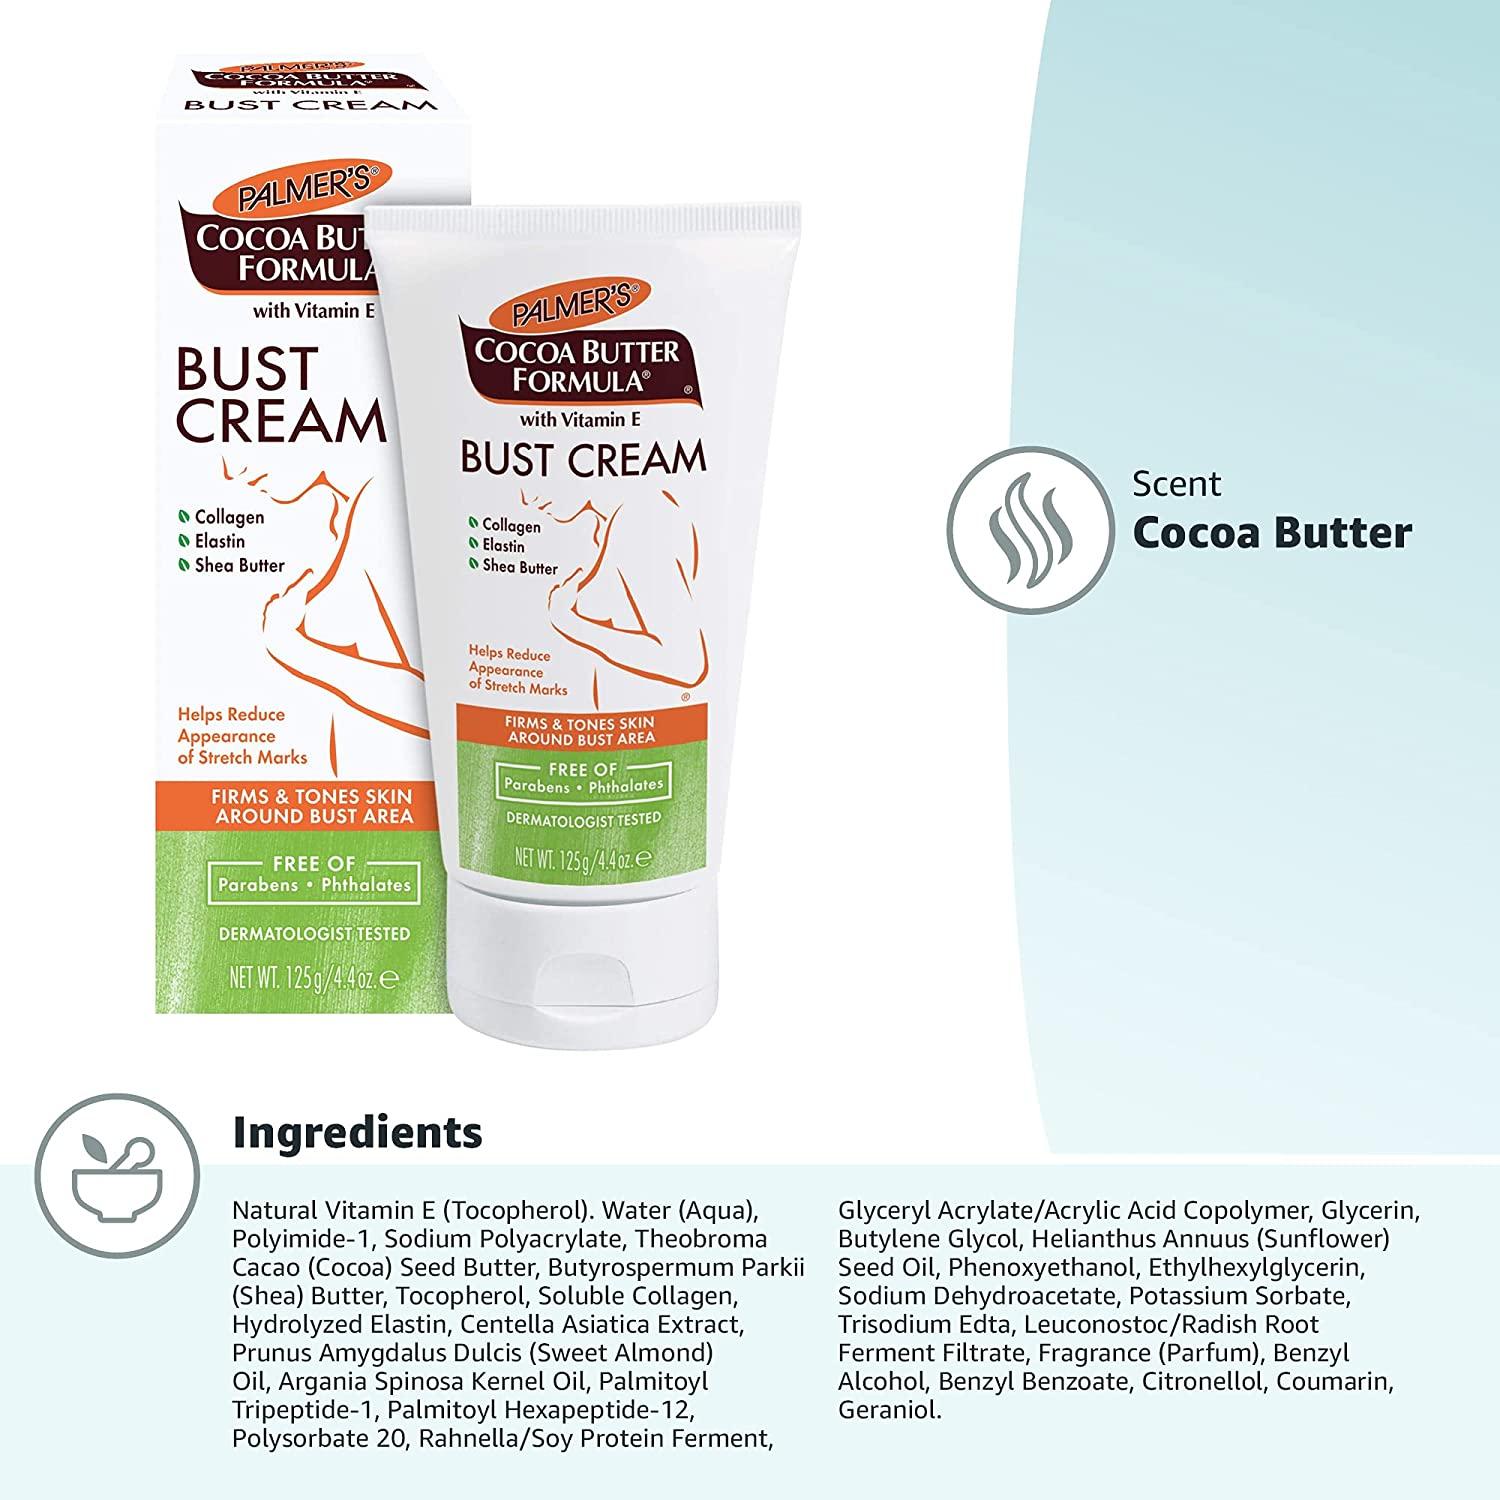 Palmer's Cocoa Butter Formula Bust Cream with Bio C-Elaste 4.4 oz